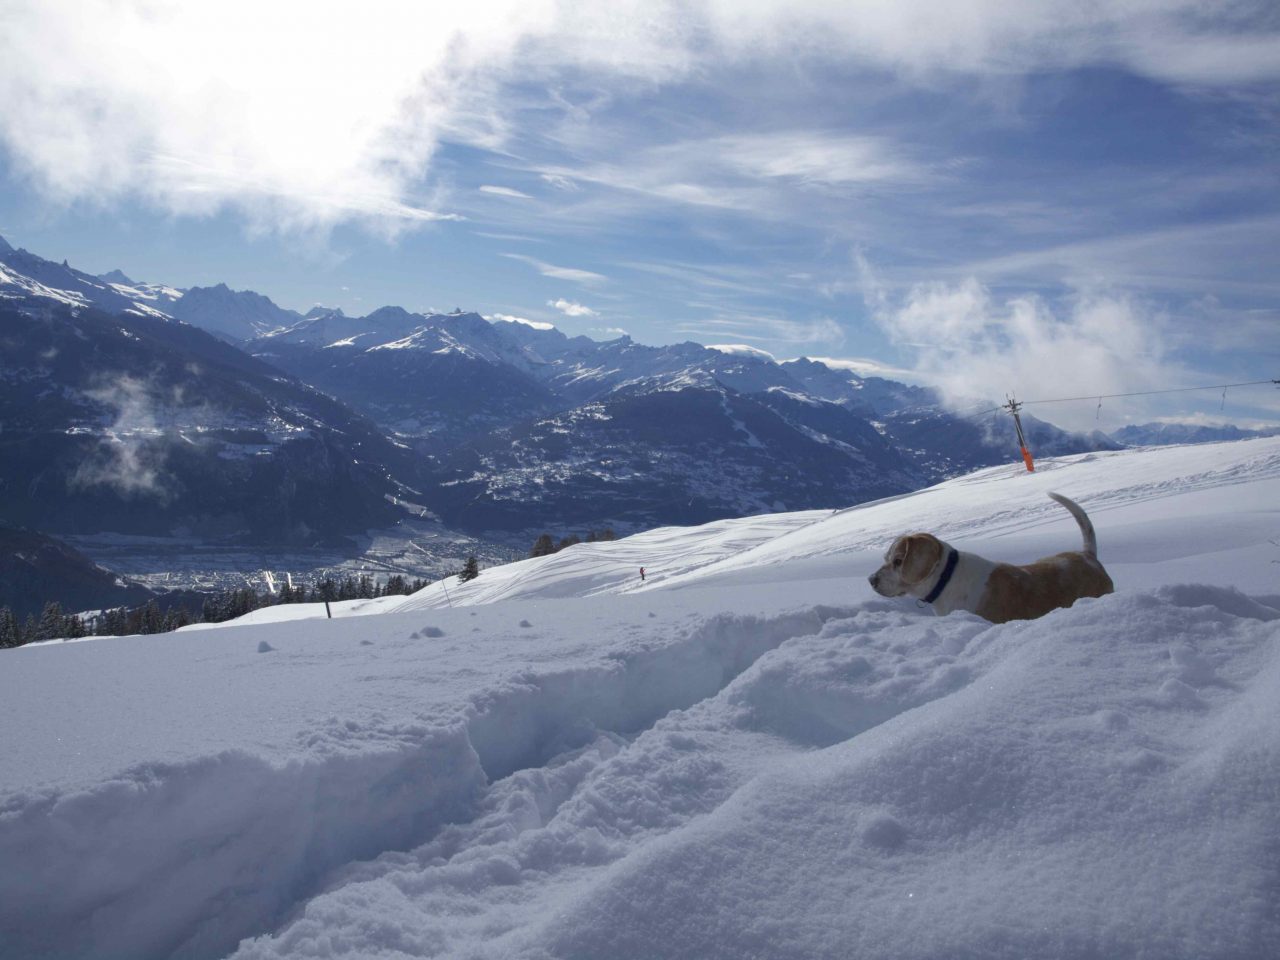 Deep Snow and stunning views in Switzerland